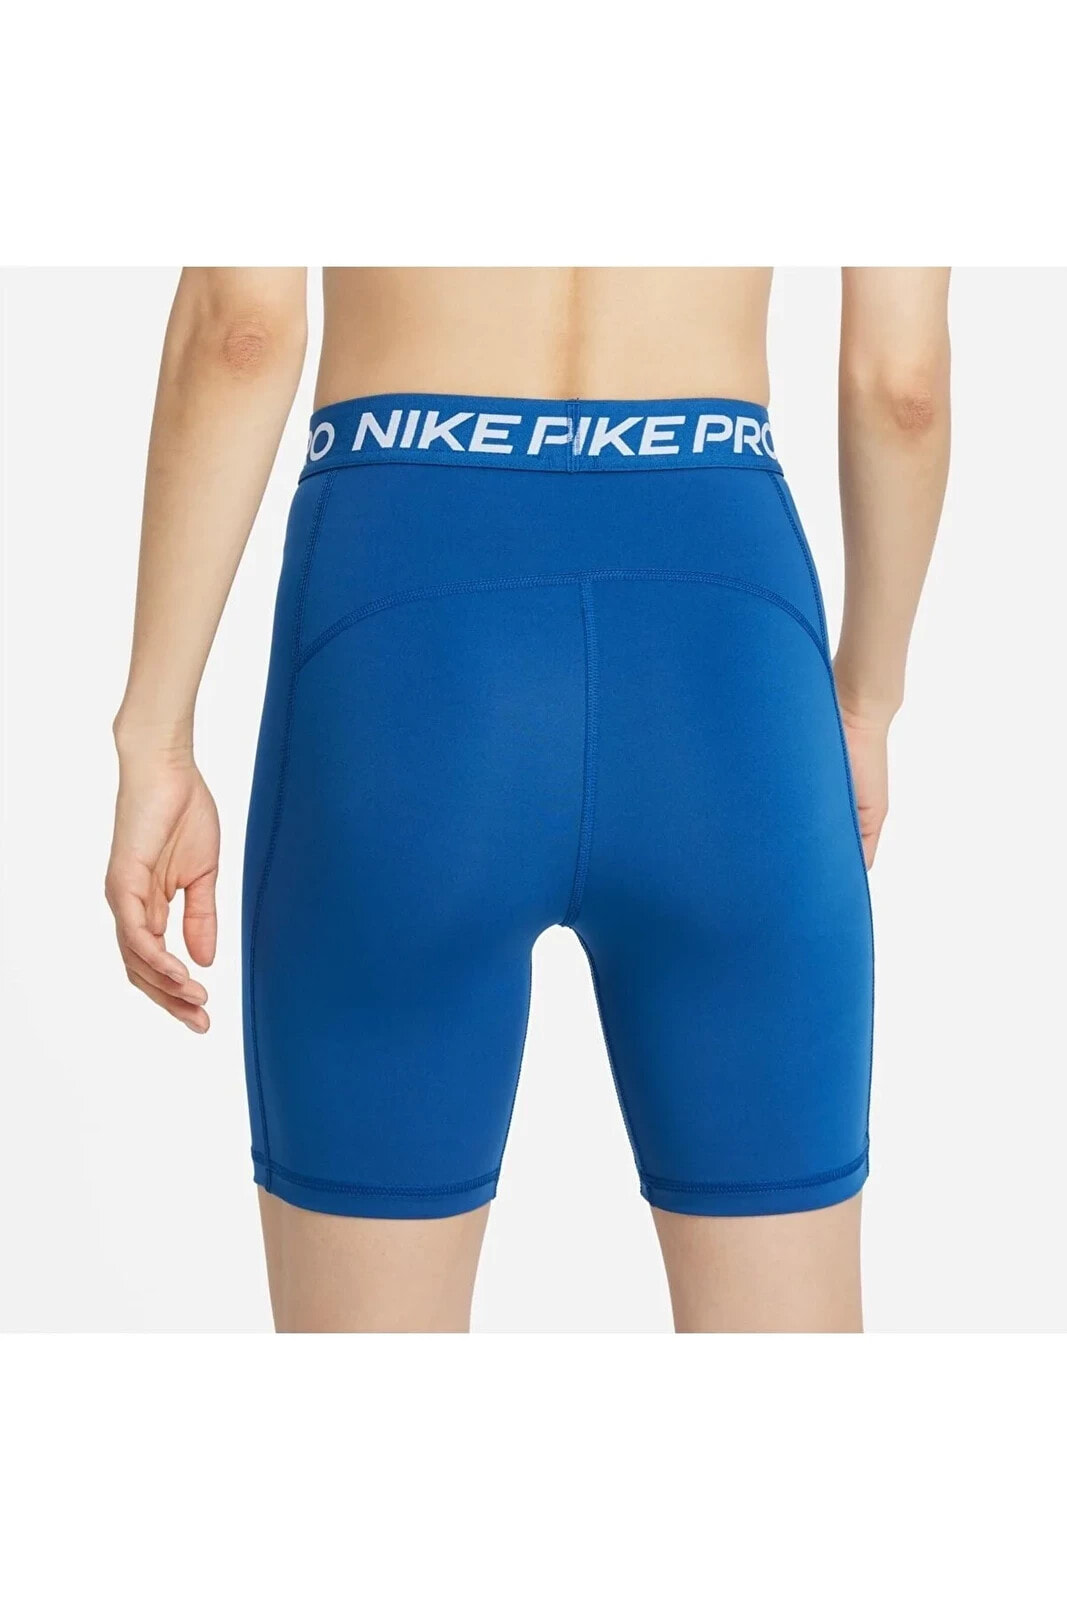 Nike Pro w NP 365 shorts Black шорты. Шорты женские Nike Pro Combat. Da0481 Nike. Шорты Seven Lab голубой. Шорт 365